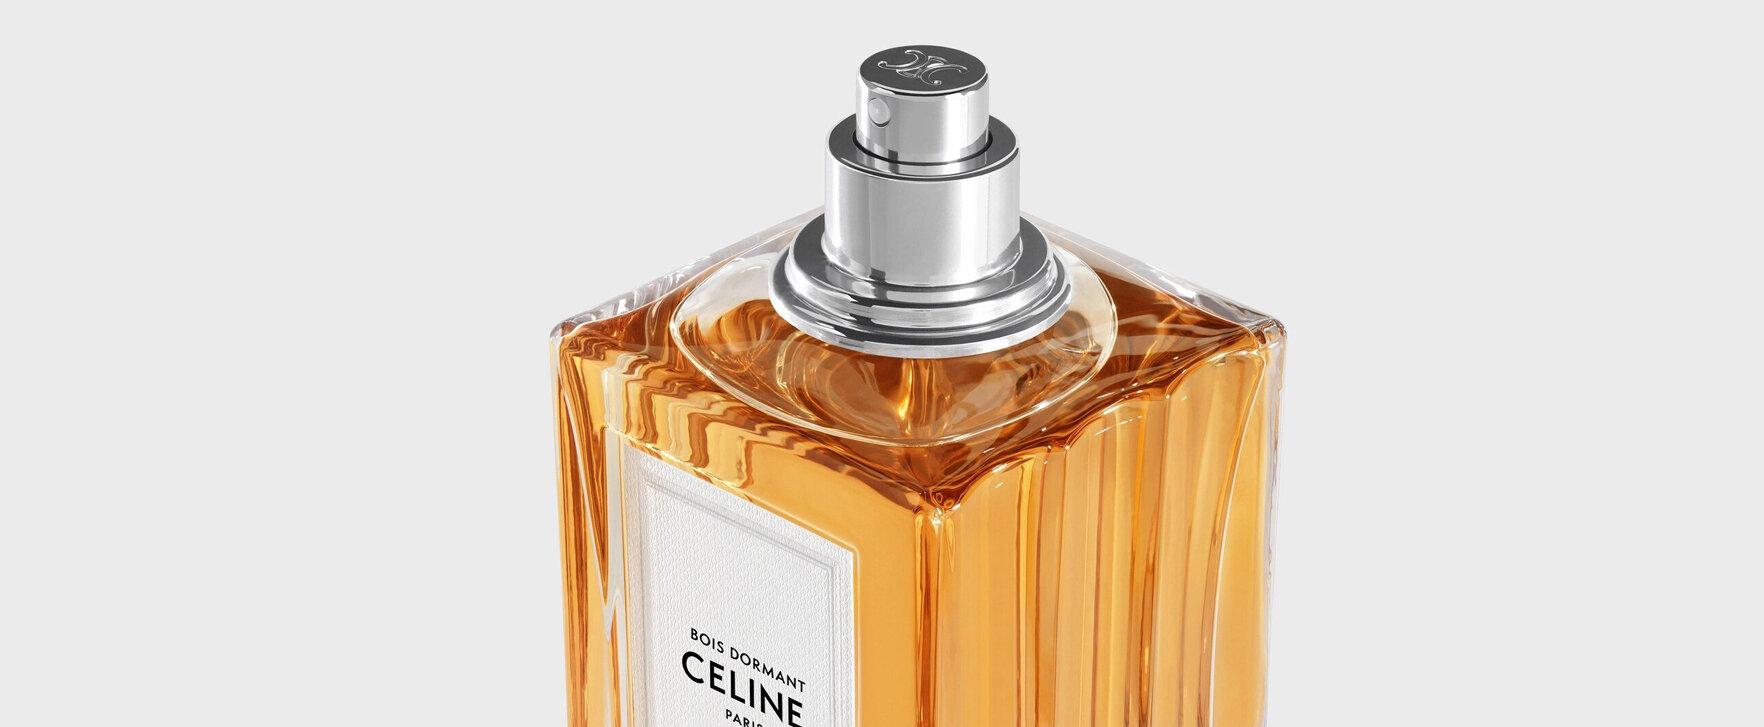 Celine Launches New Fragrance “Bois Dormant”